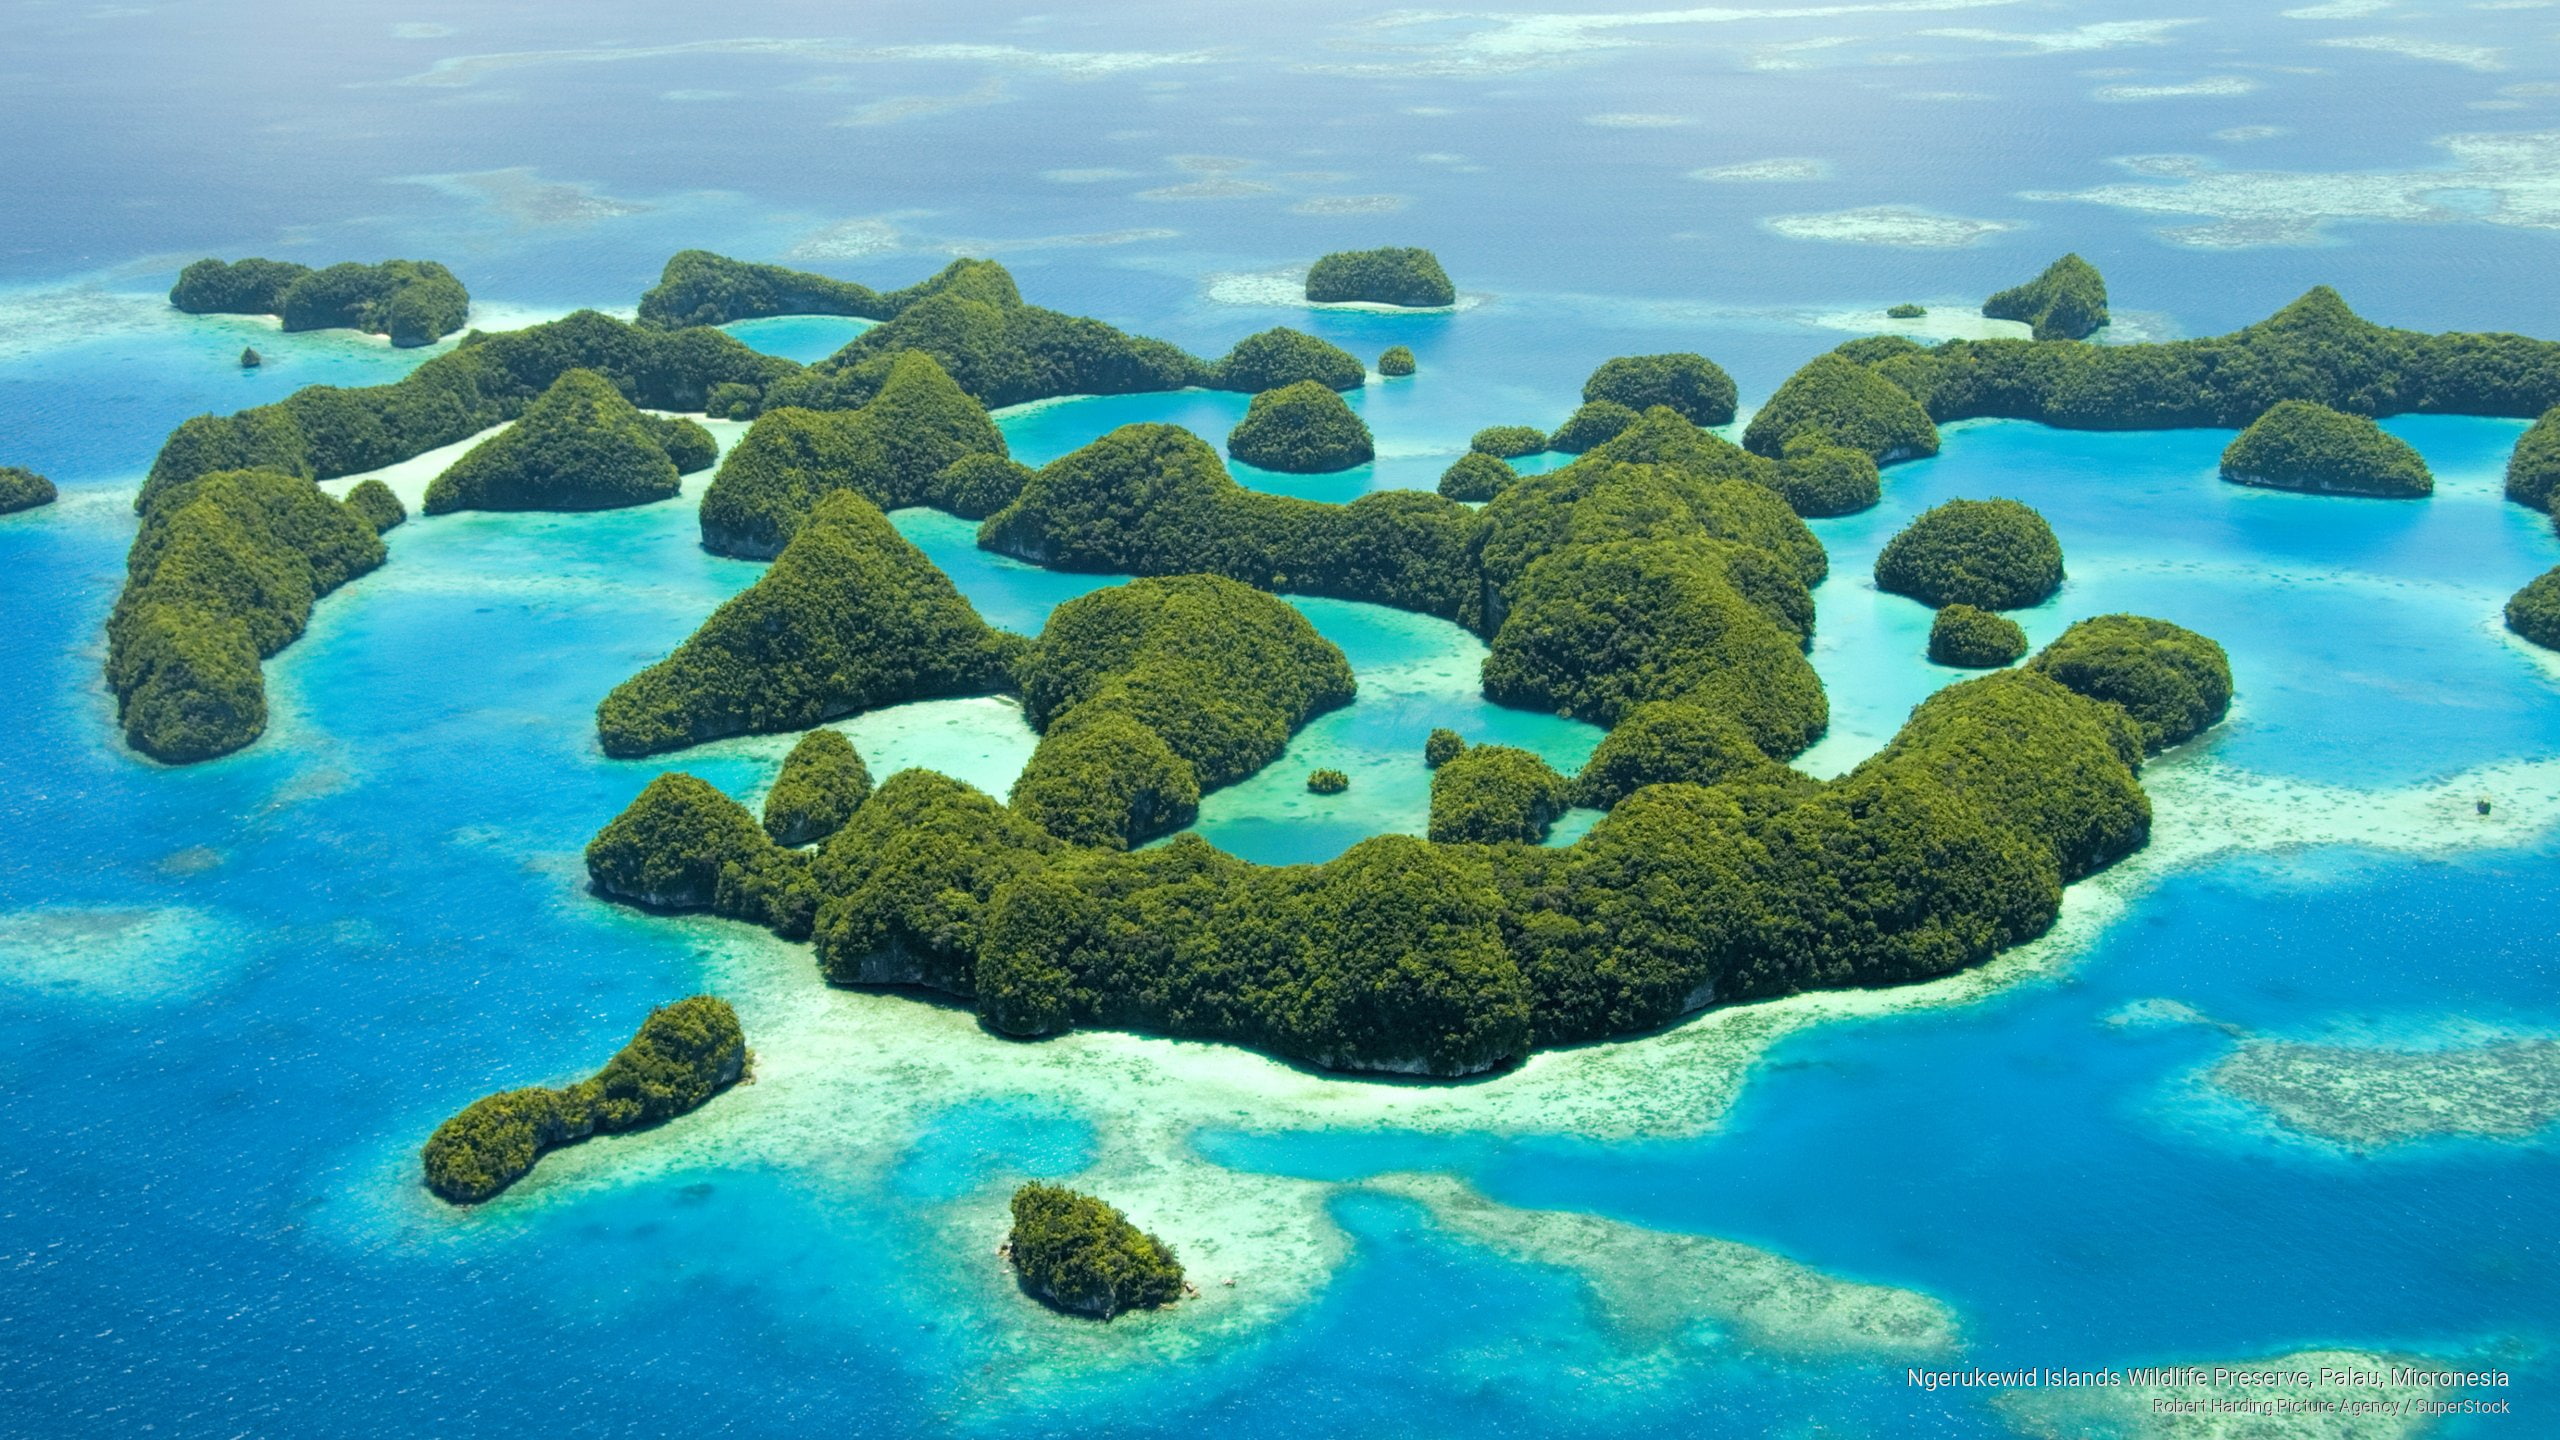 Ngerukewid Islands Wildlife Preserve, Palau, Micronesia